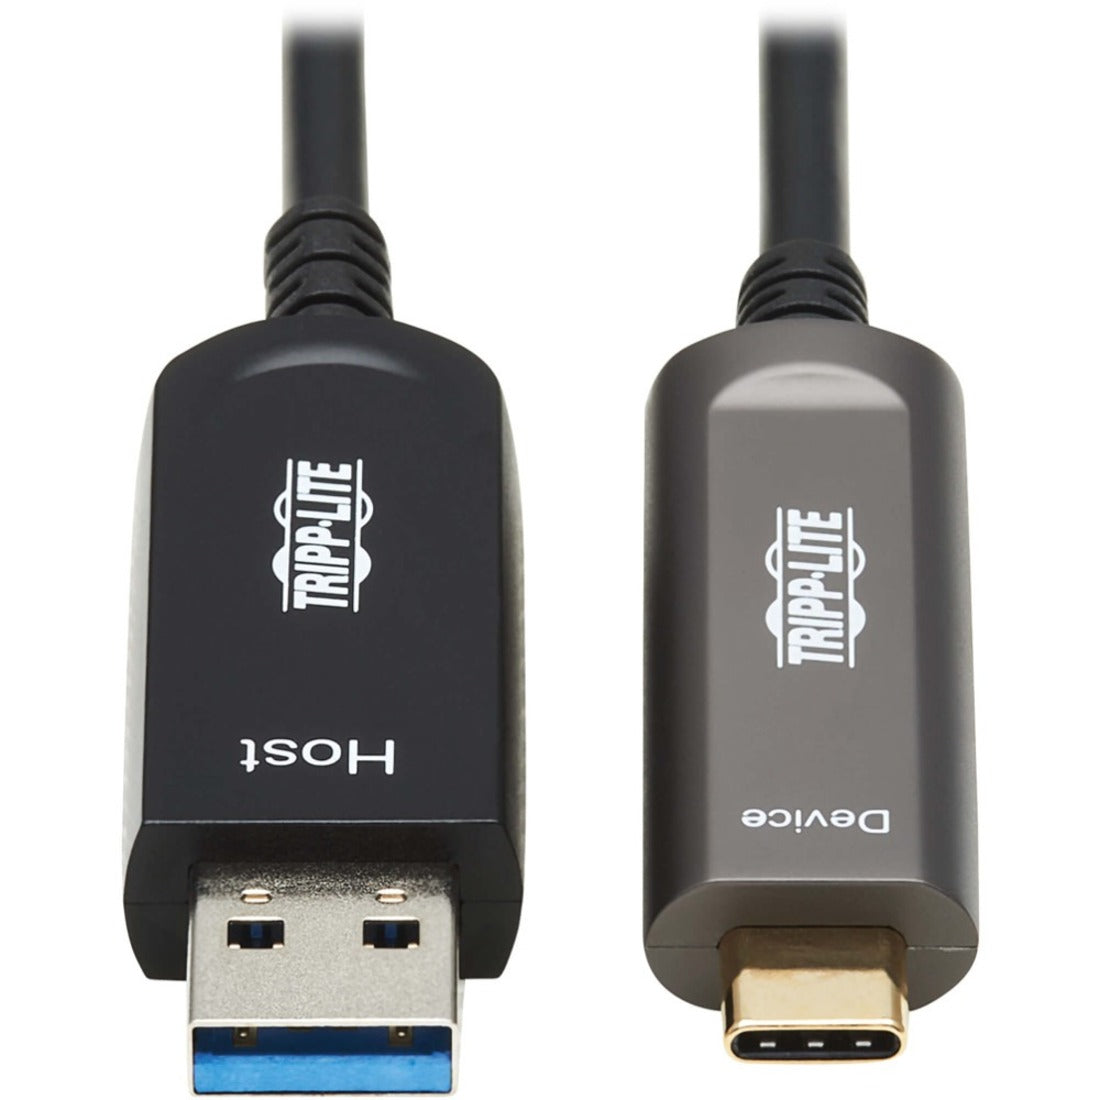 Tripp Lite U428F-15M-D3 Fiber Optic Data Transfer Cable, 49.21 ft, 10 Gbit/s, USB 3.2 (Gen 2) Type A - Male to USB 3.2 (Gen 2) Type C - Male